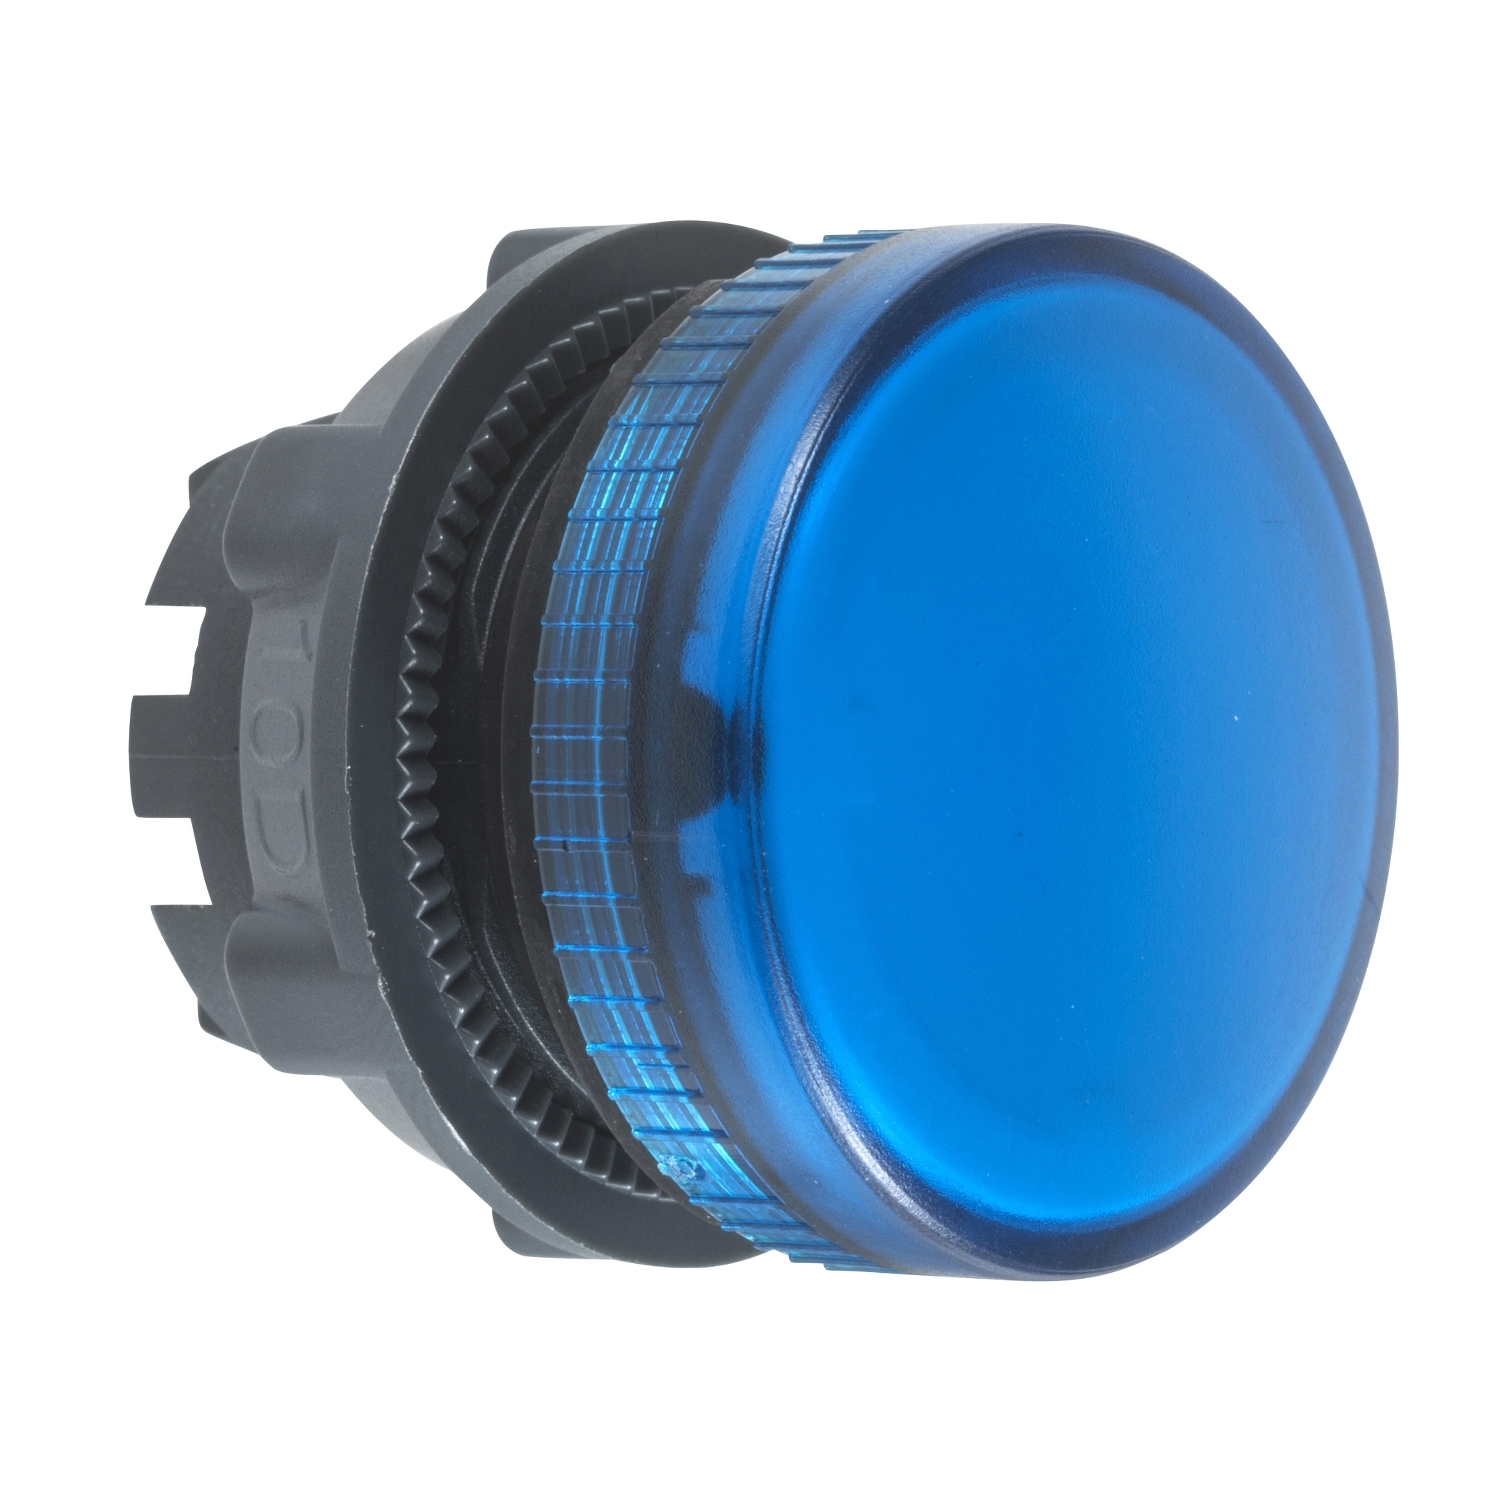 Head for pilot light, Harmony XB5, plastic, blue, 22mm, universal LED, plain lens